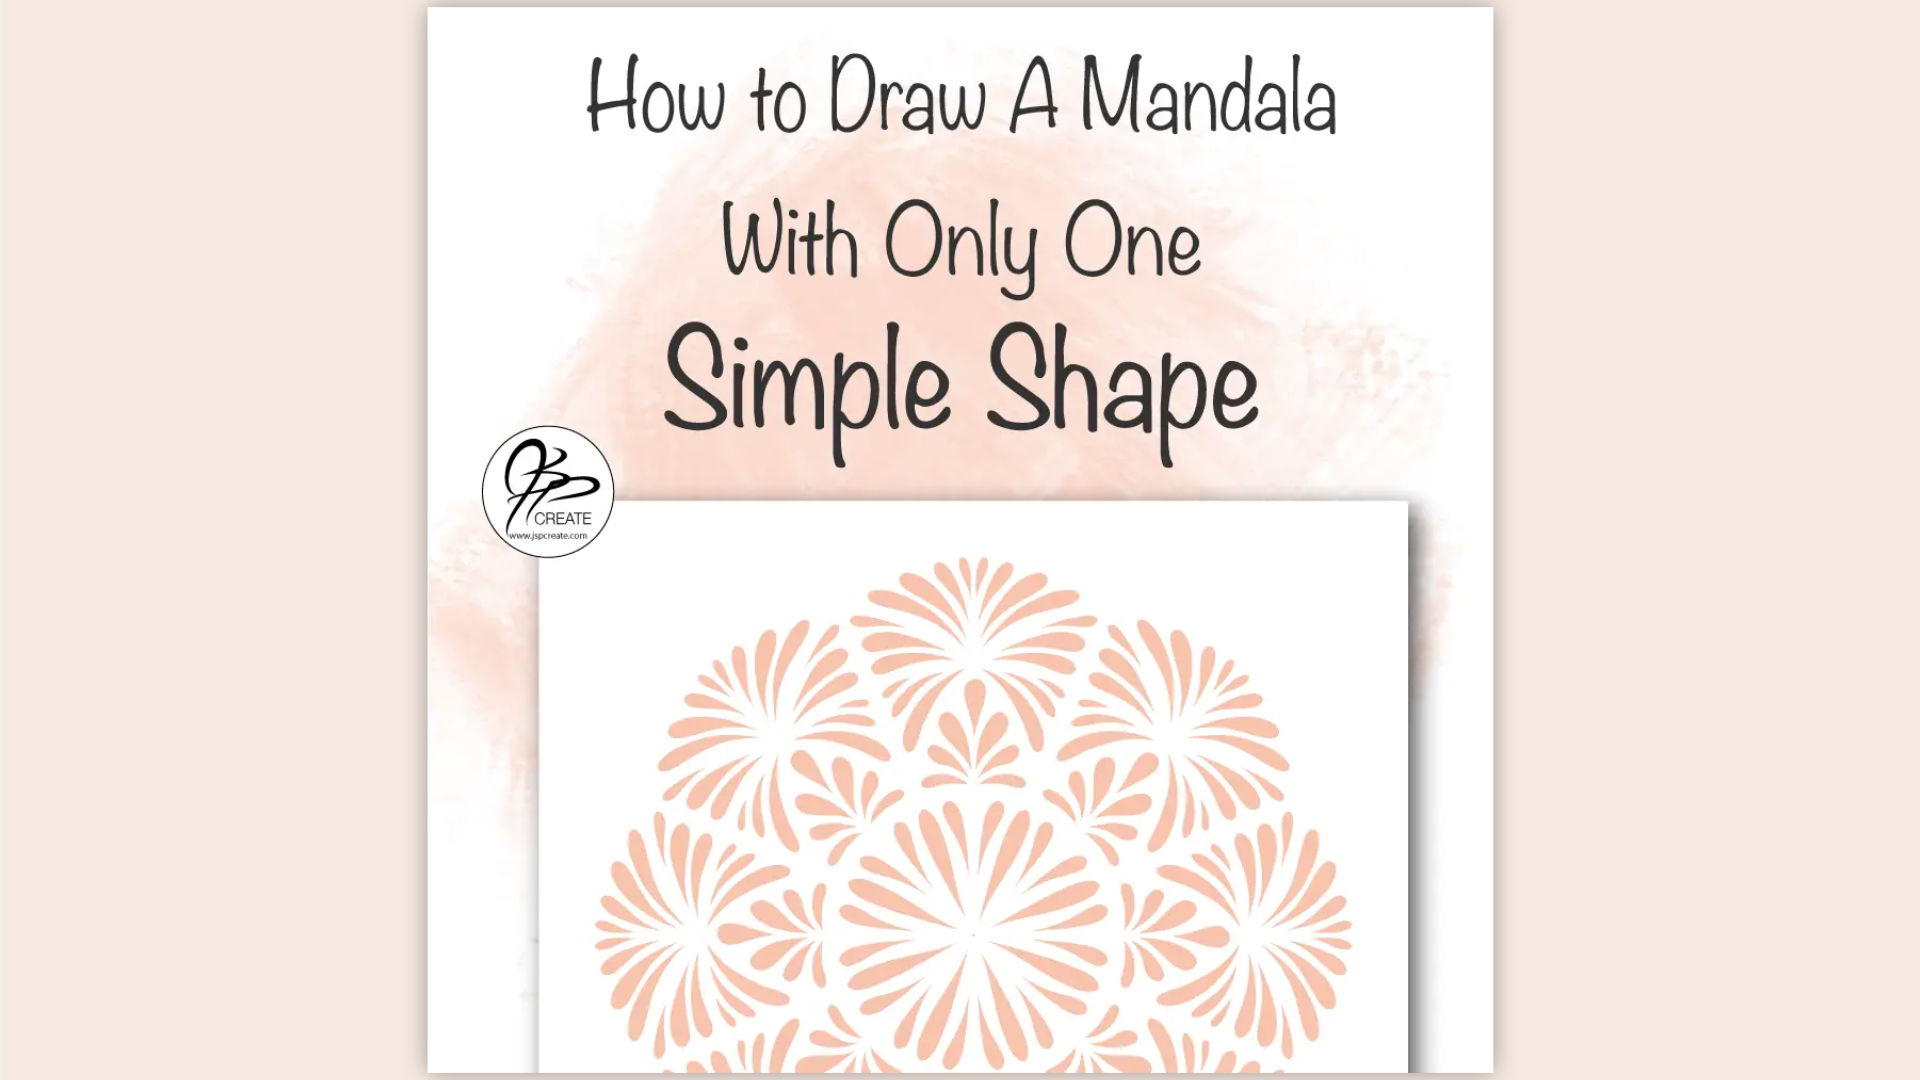 https://www.jspcreate.com/wp-content/uploads/2018/06/draw-mandala-with-one-shape-cover-wide.jpg